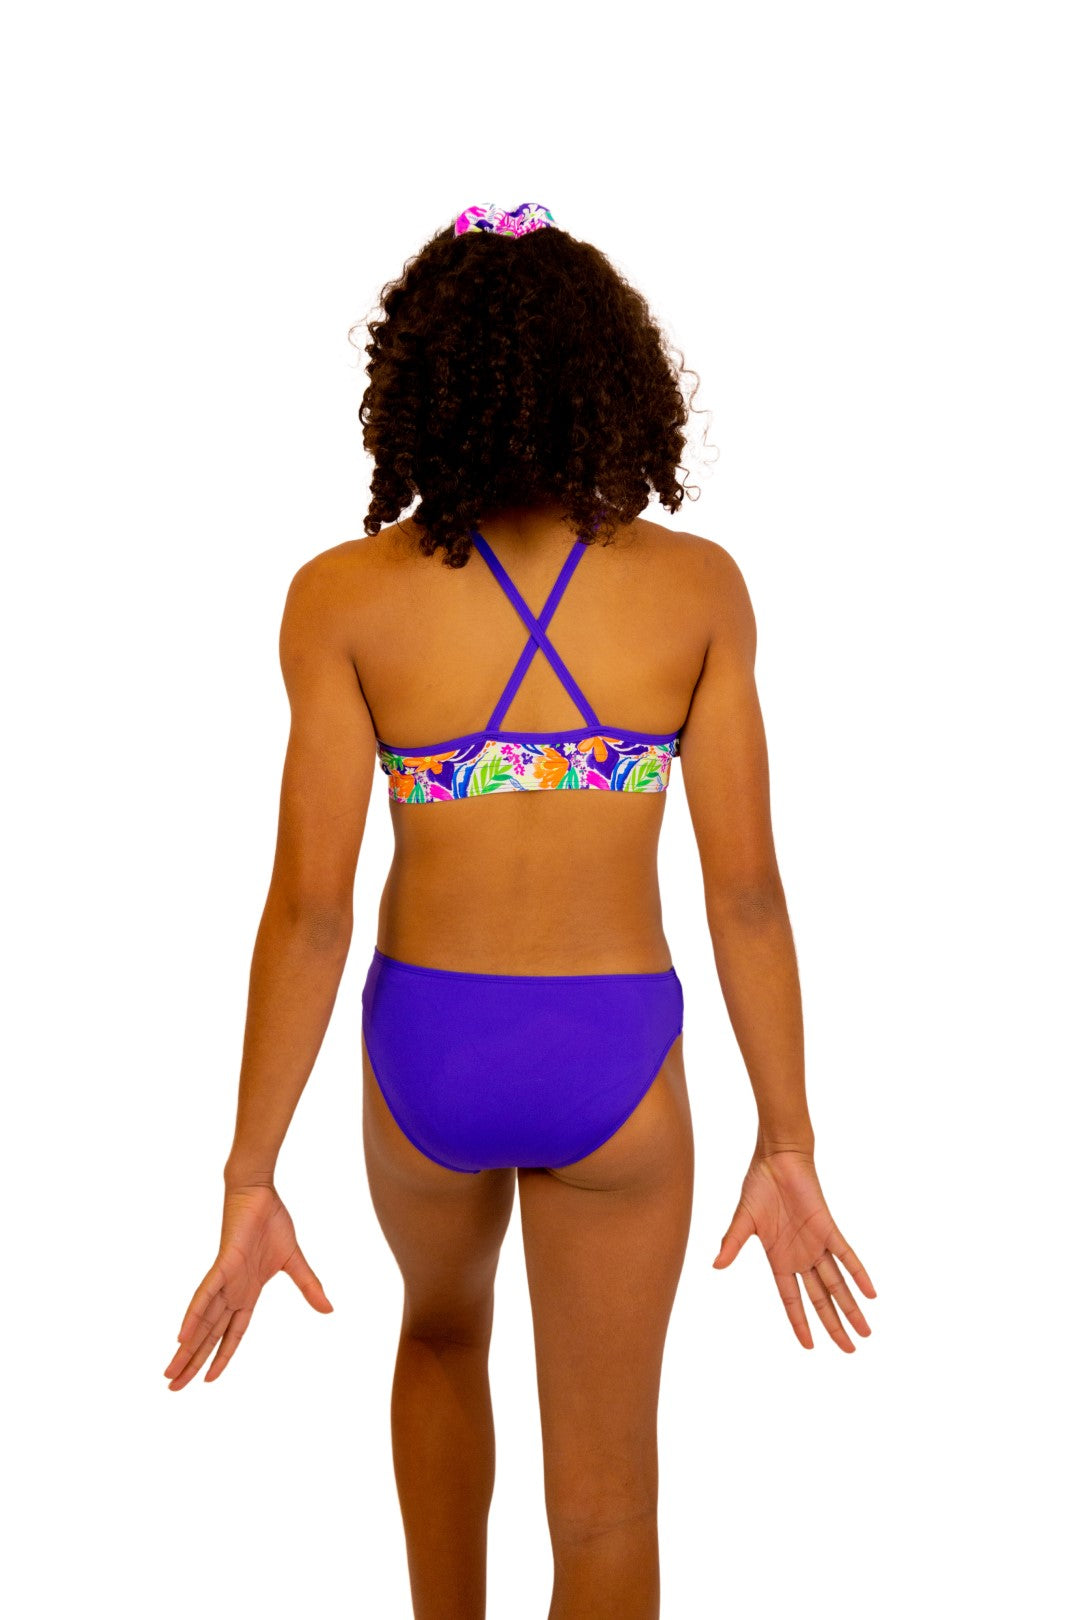 Purple Bikini Bottoms for girls. Swimwear, Bikinis, Separates, Swimsuit, Kids Swimwear, Girls, Togs, Beach wear, Swimming, B you Active, B you Swimwear, B you leotards. 